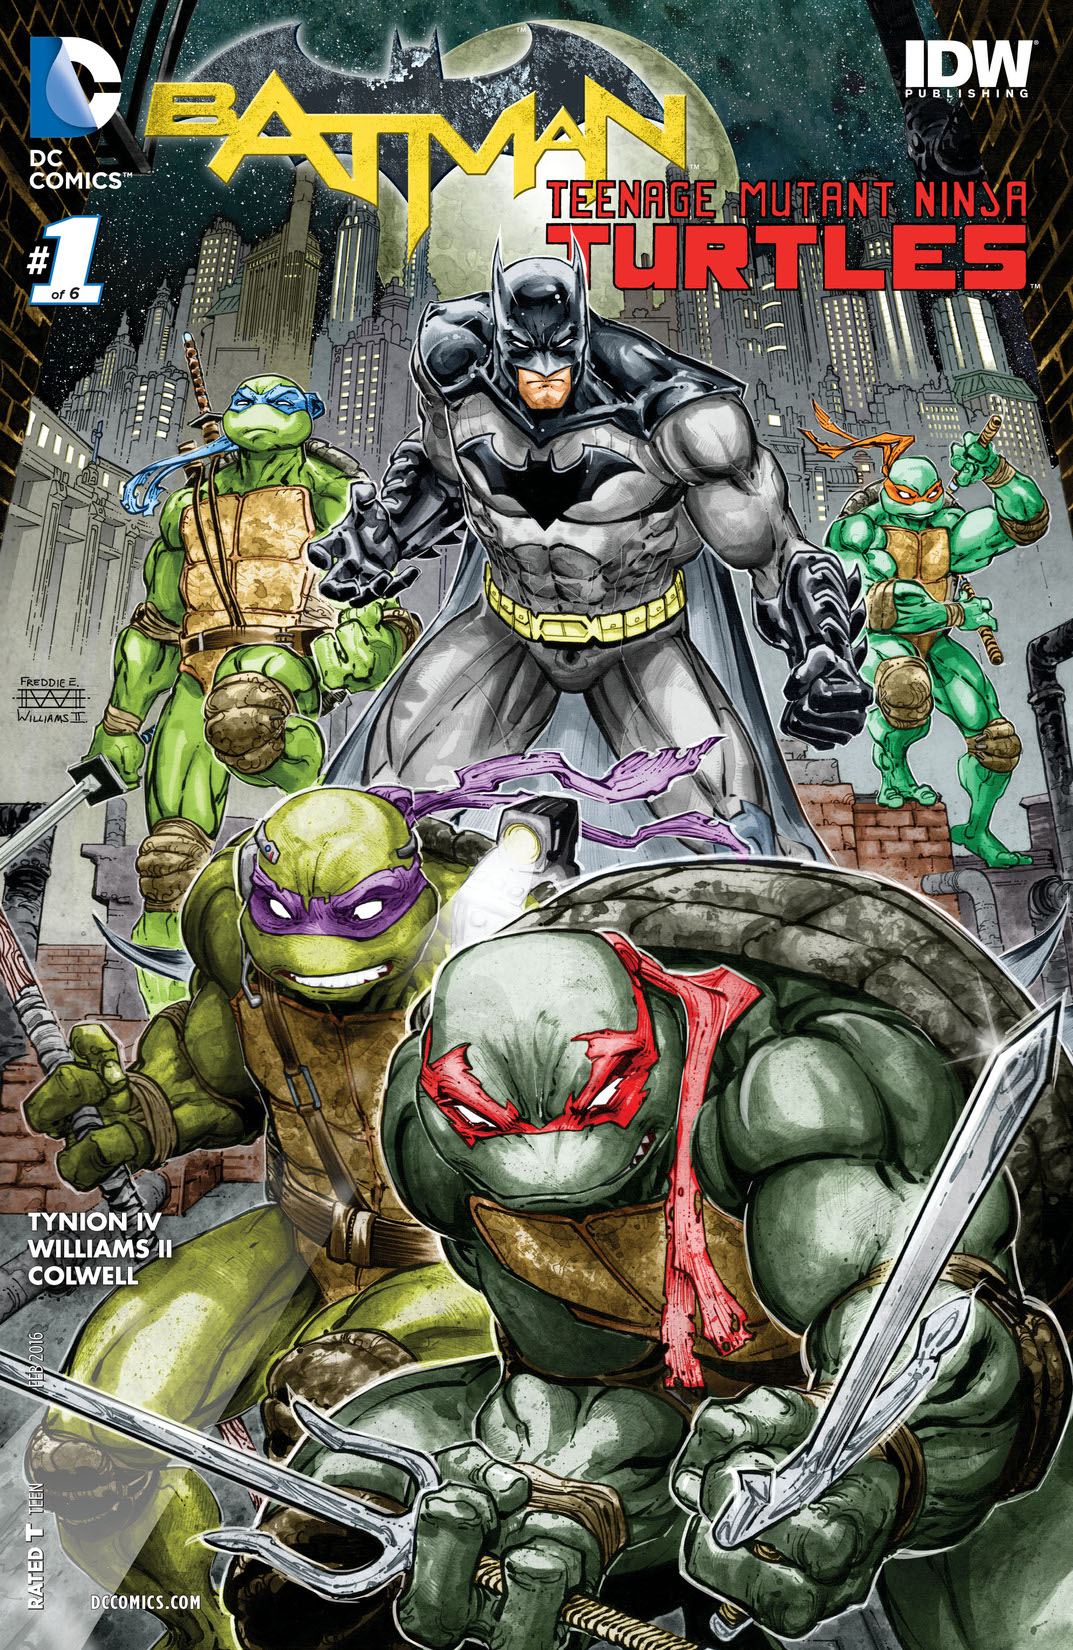 Batman/Teenage Mutant Ninja Turtles #1 preview images